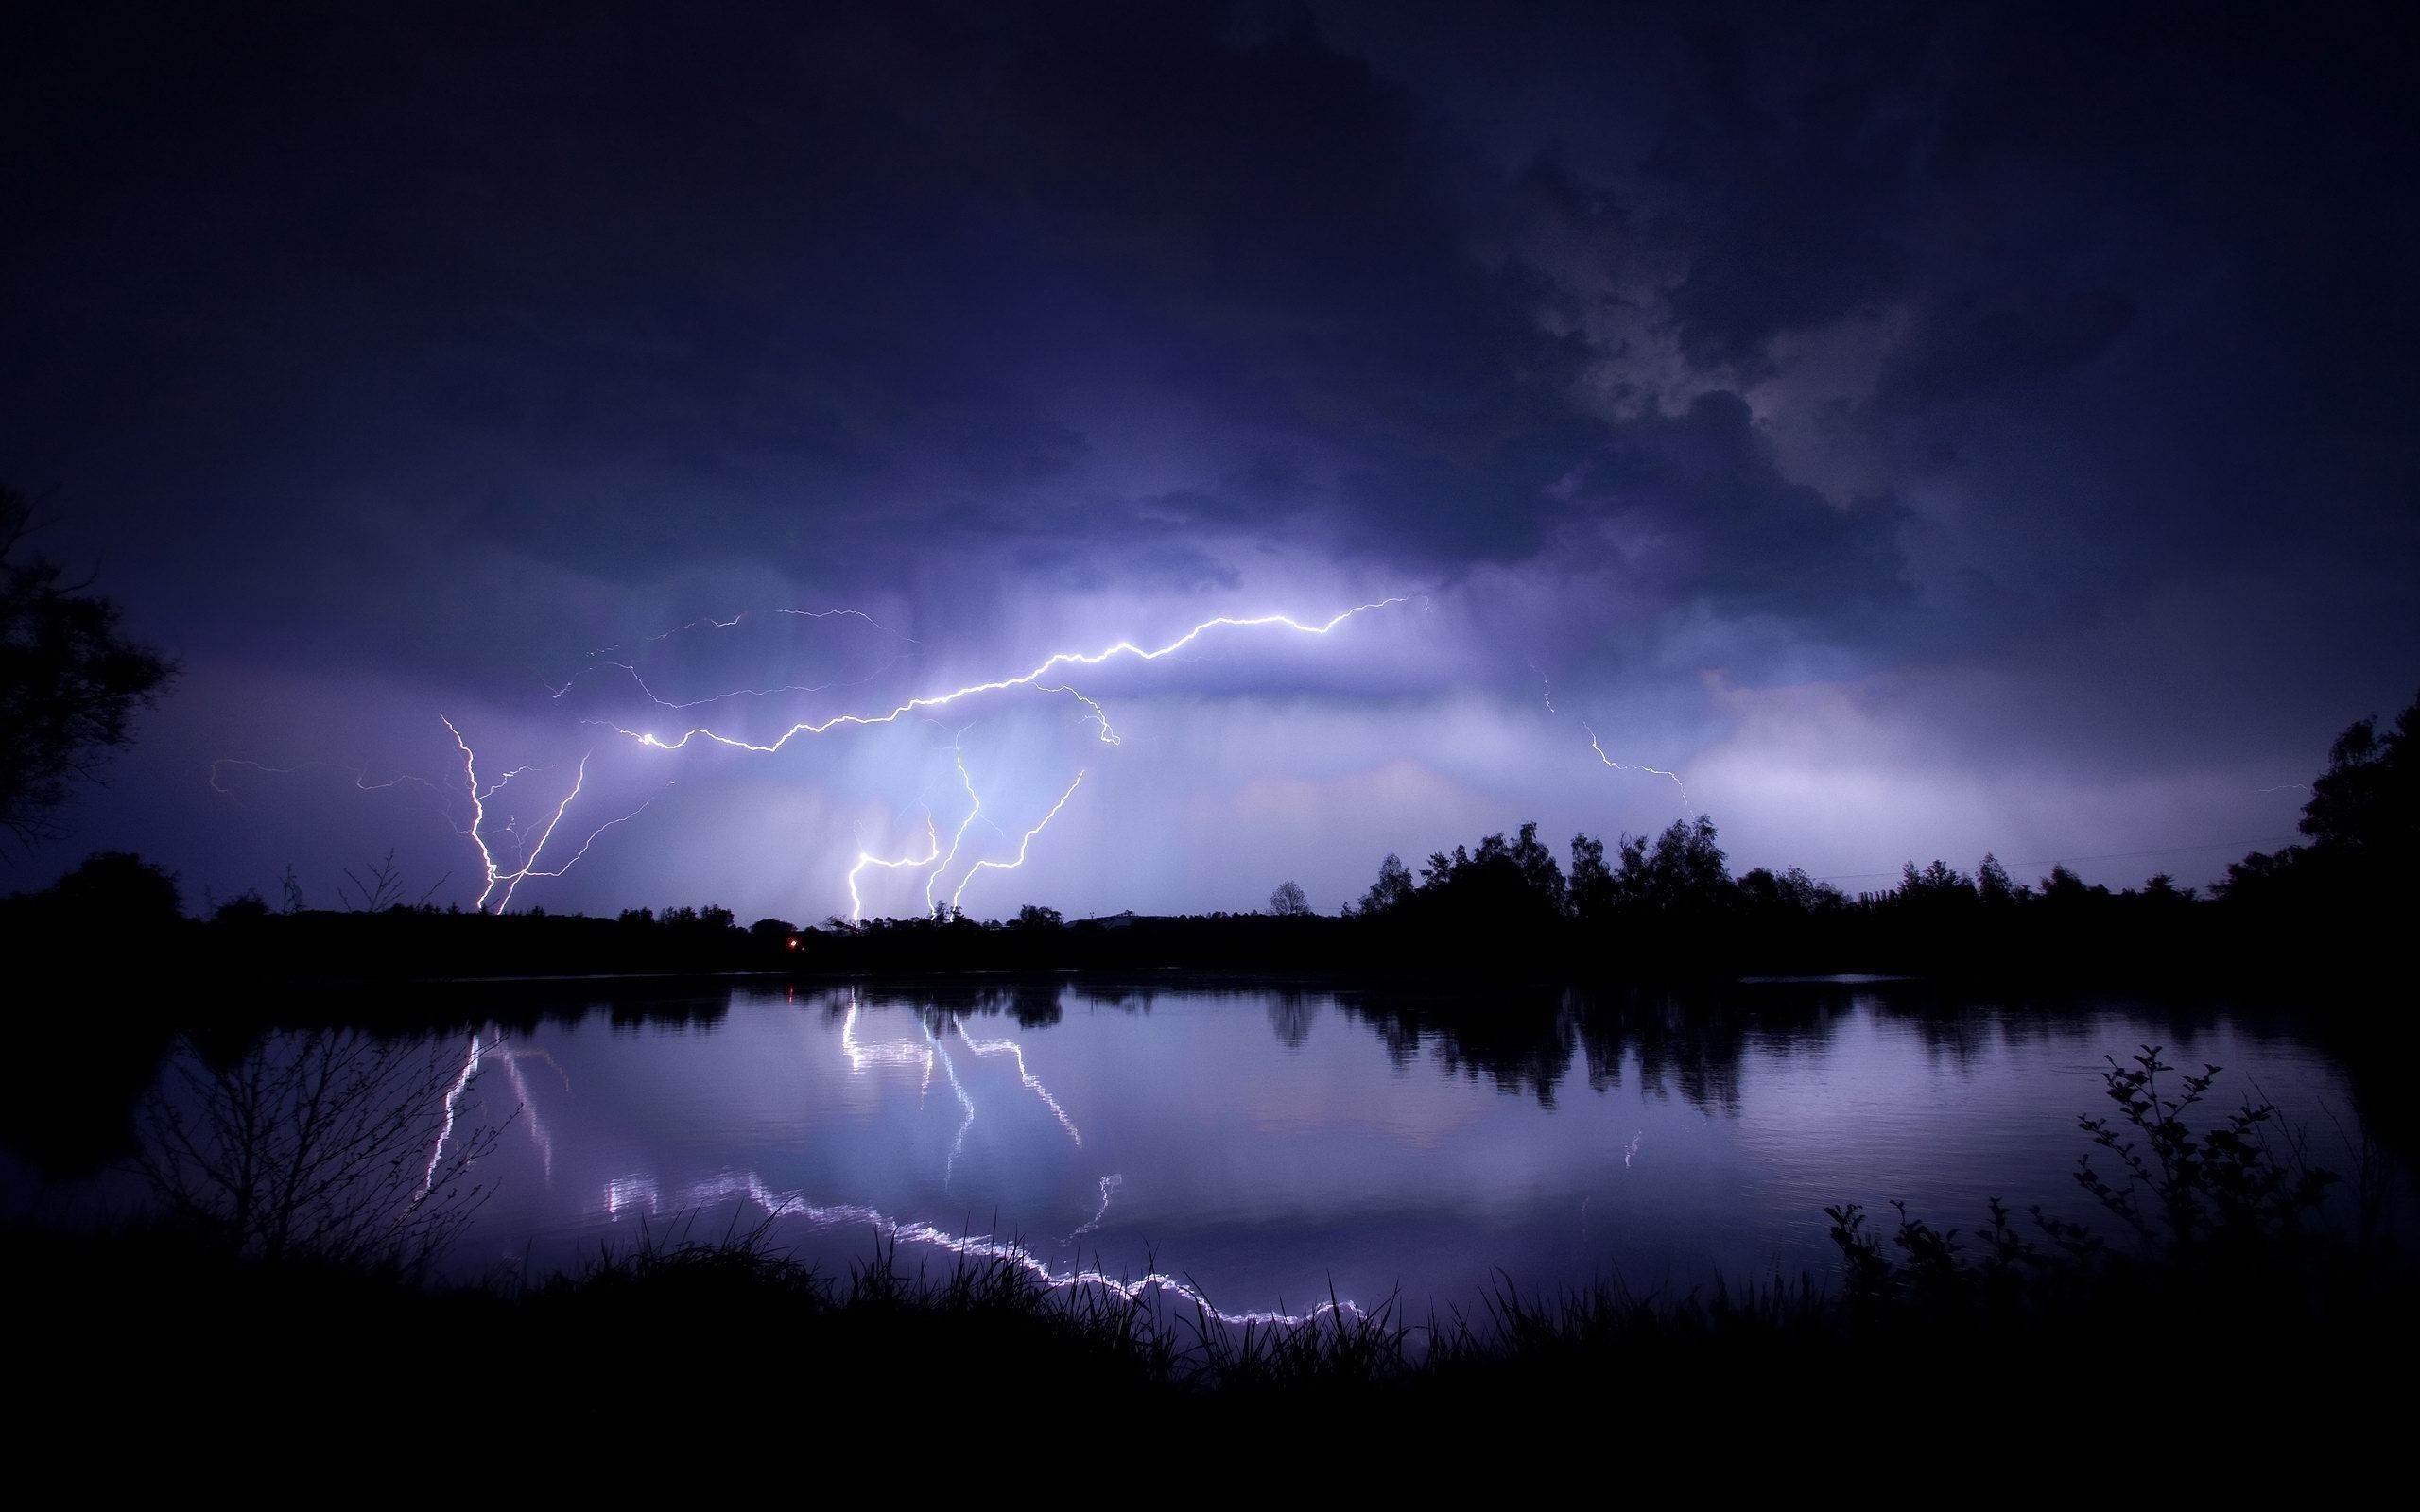 Lightning storm over a lake - Storm